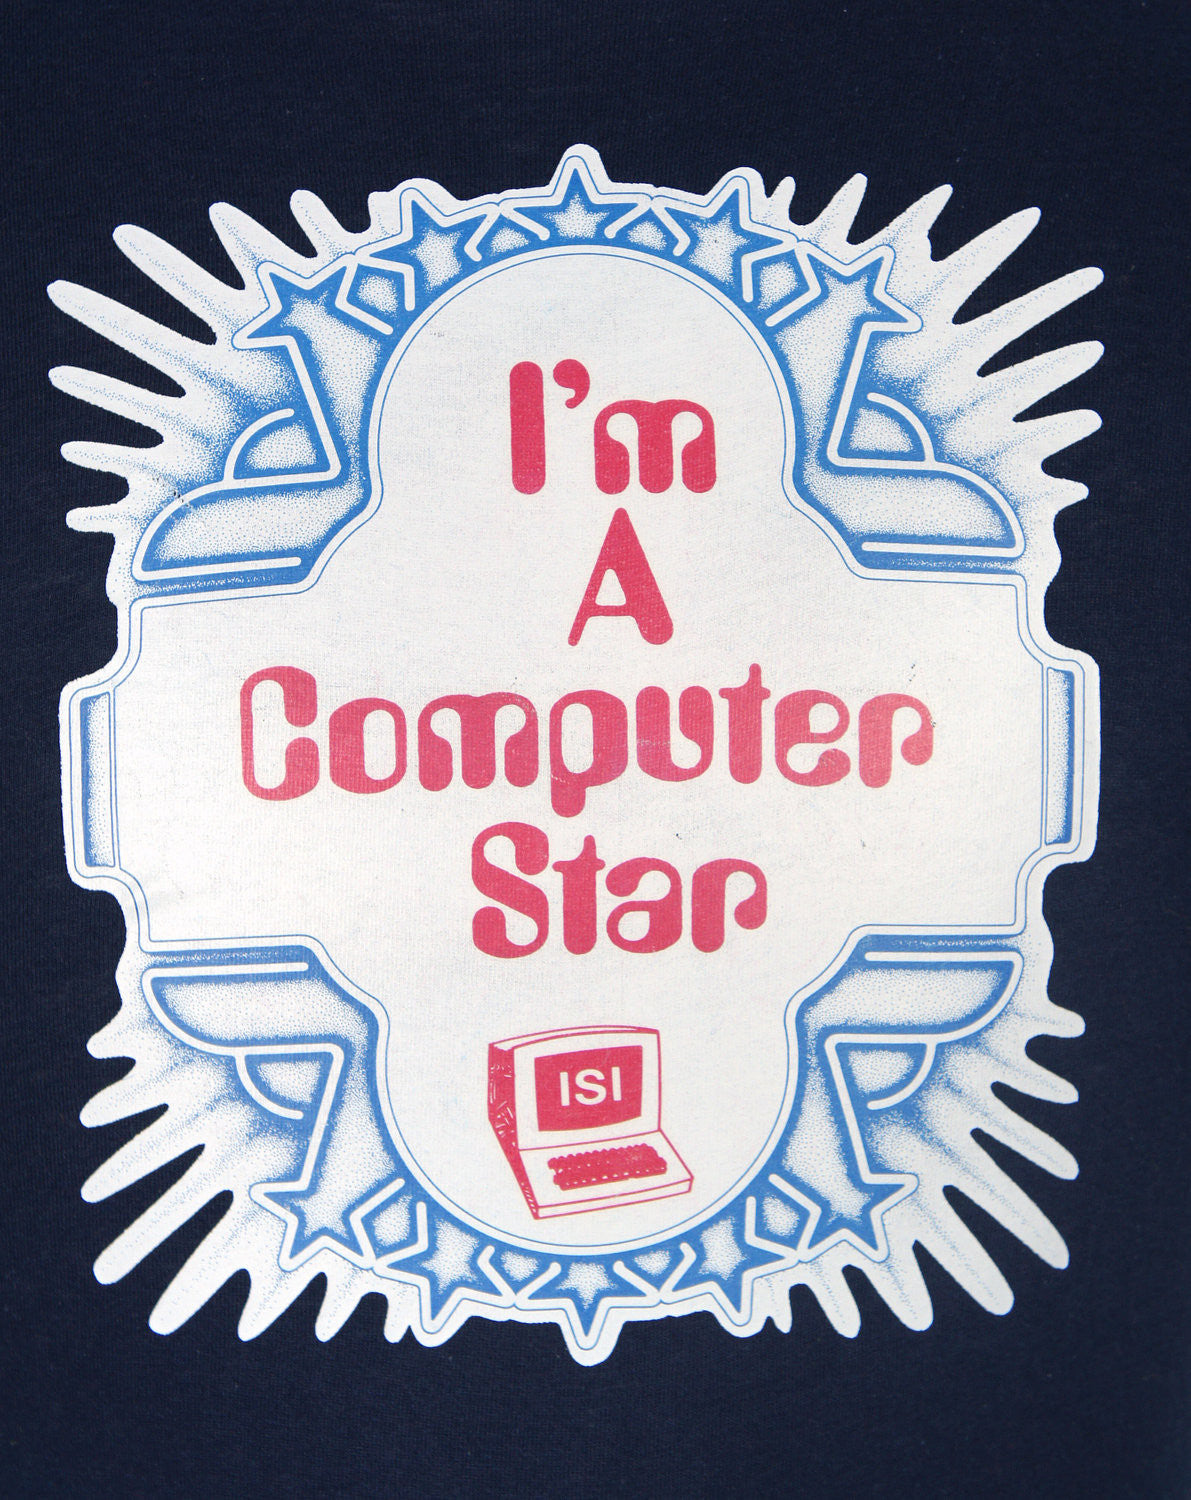 1980's I'm A Computer Star T-Shirt - Size M